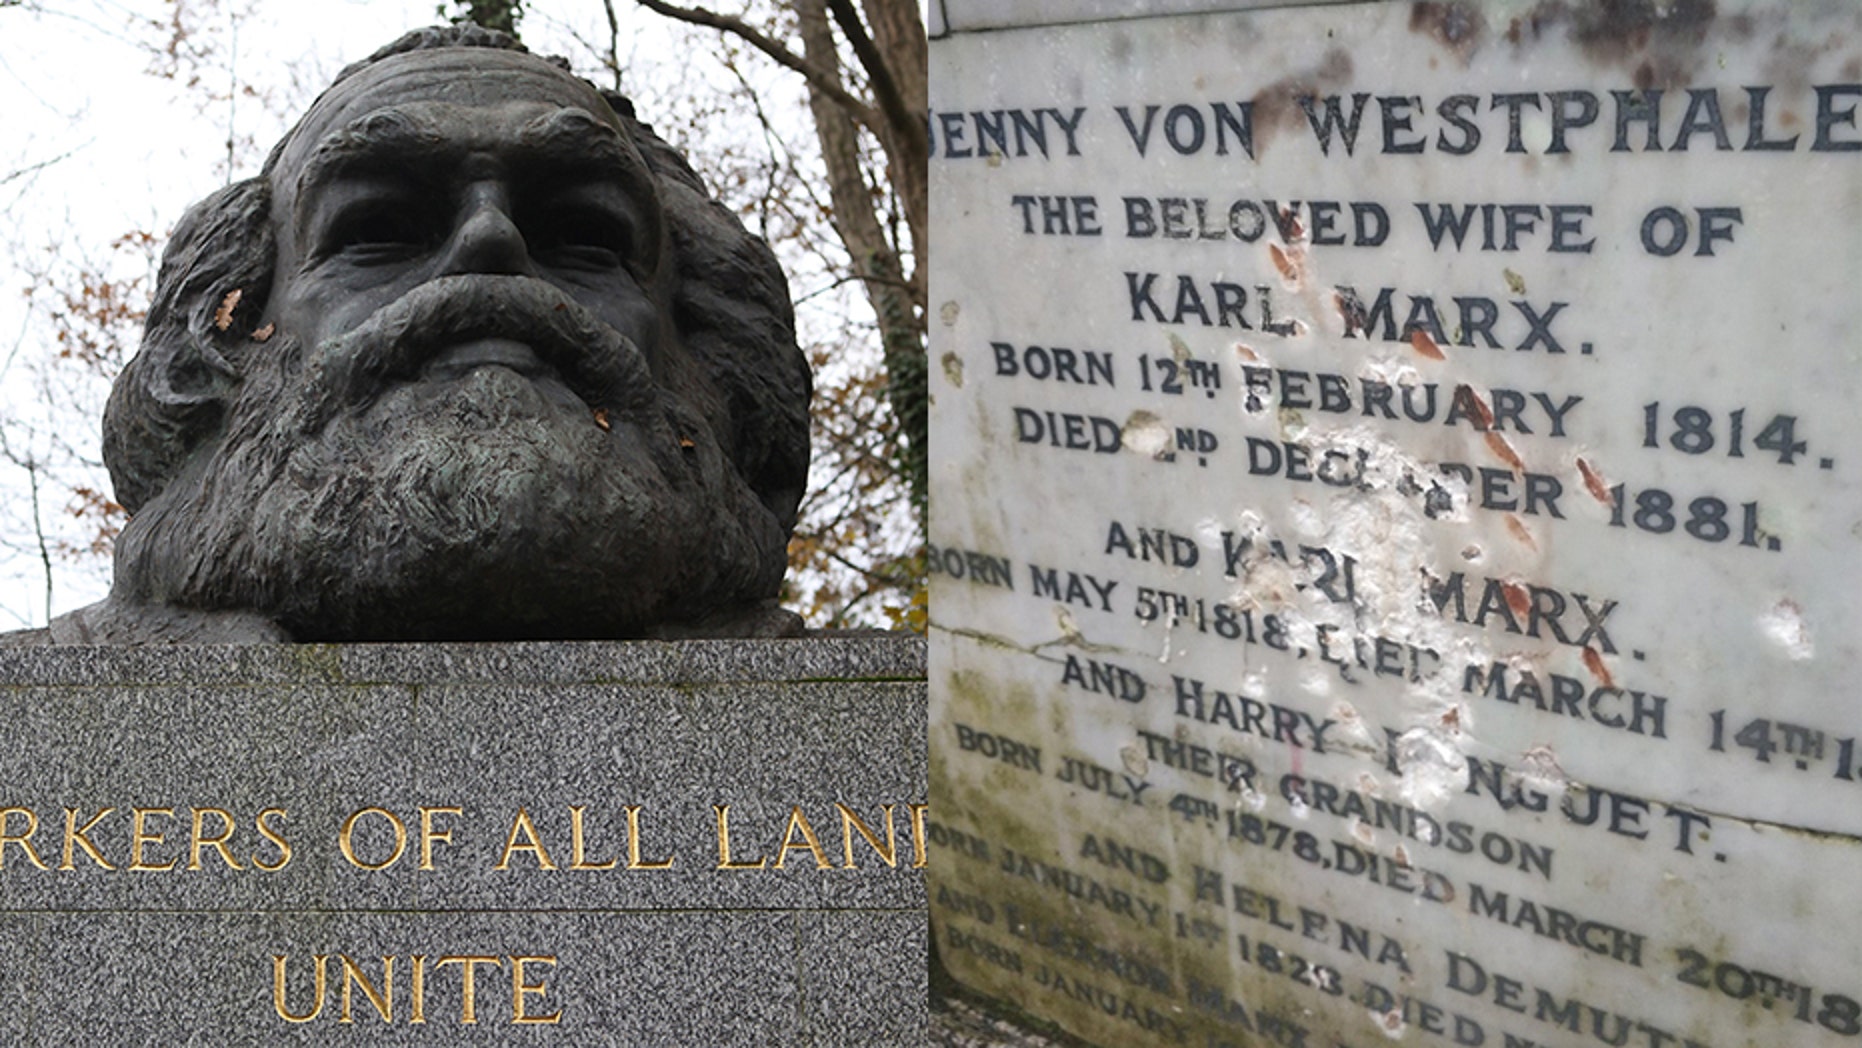 Karl Marx grave in London damaged in act of ‘mindless’ vandalism